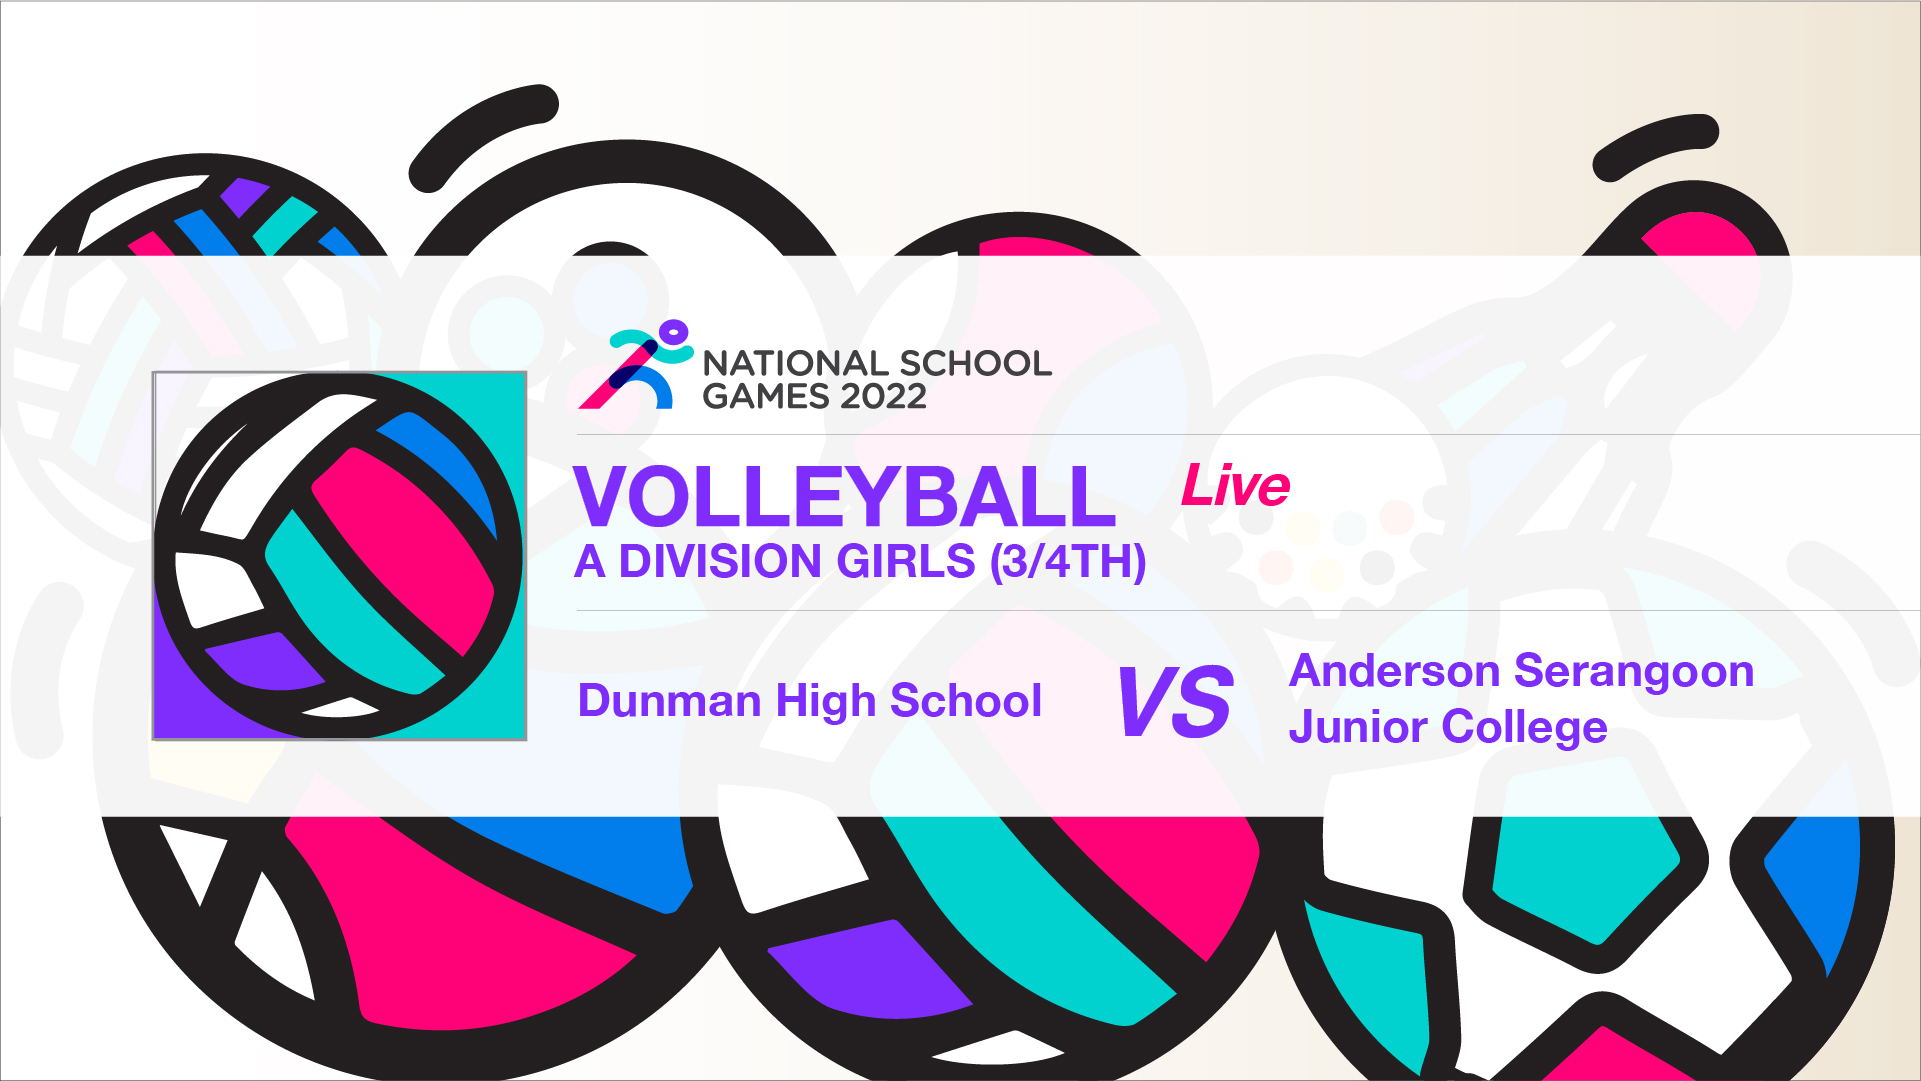 SSSC Volleyball A Division Girls (3/4th) | Dunman High School vs Anderson Serangoon Junior College